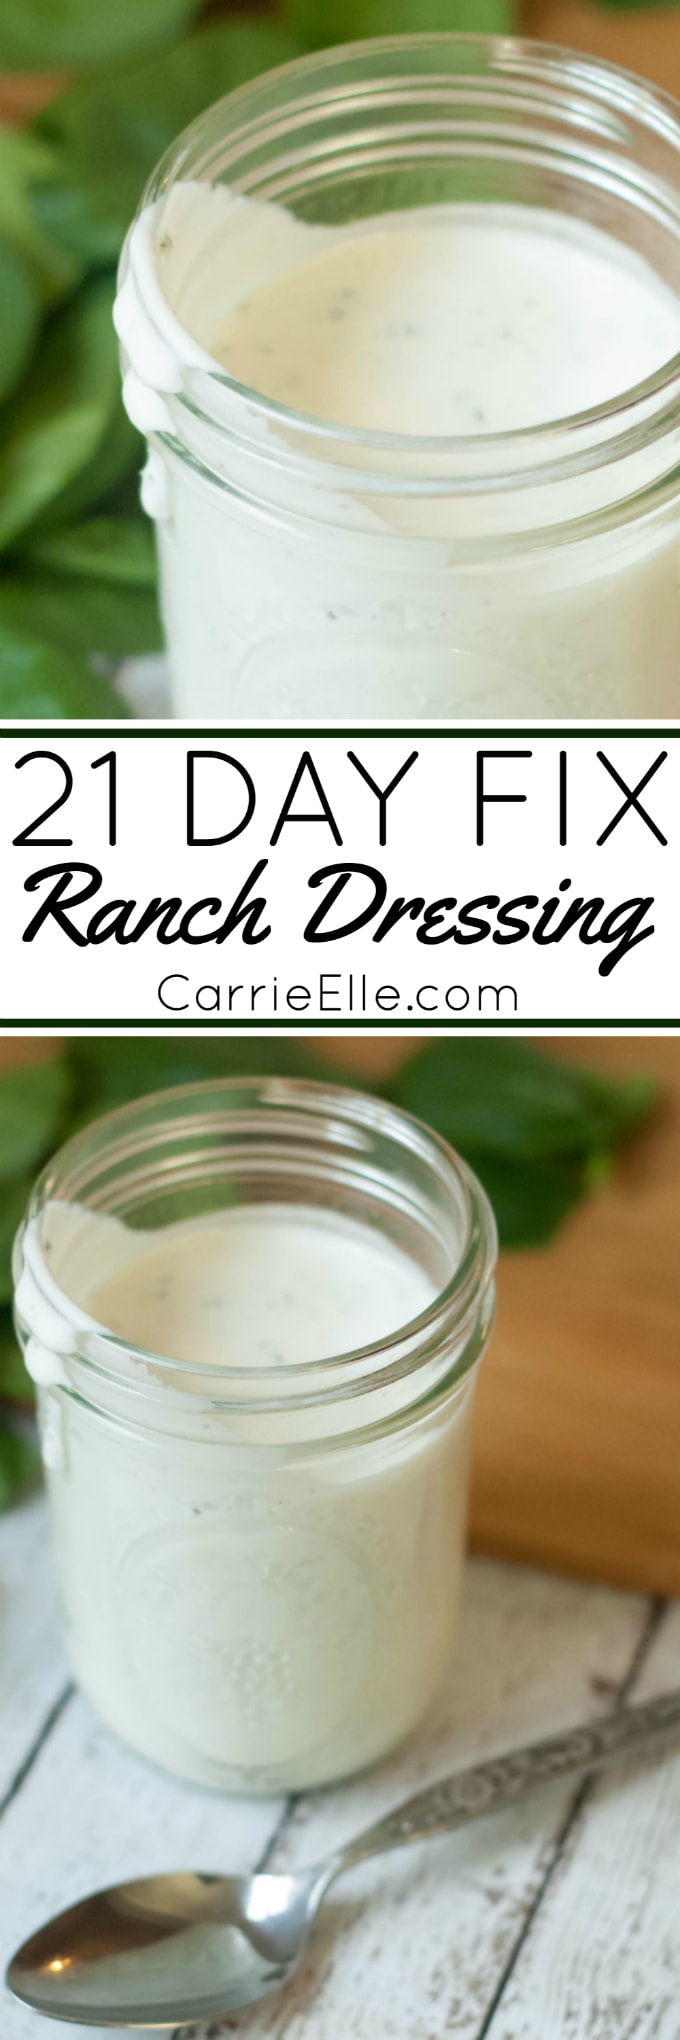 21 Day Fix Ranch Dressing Recipe